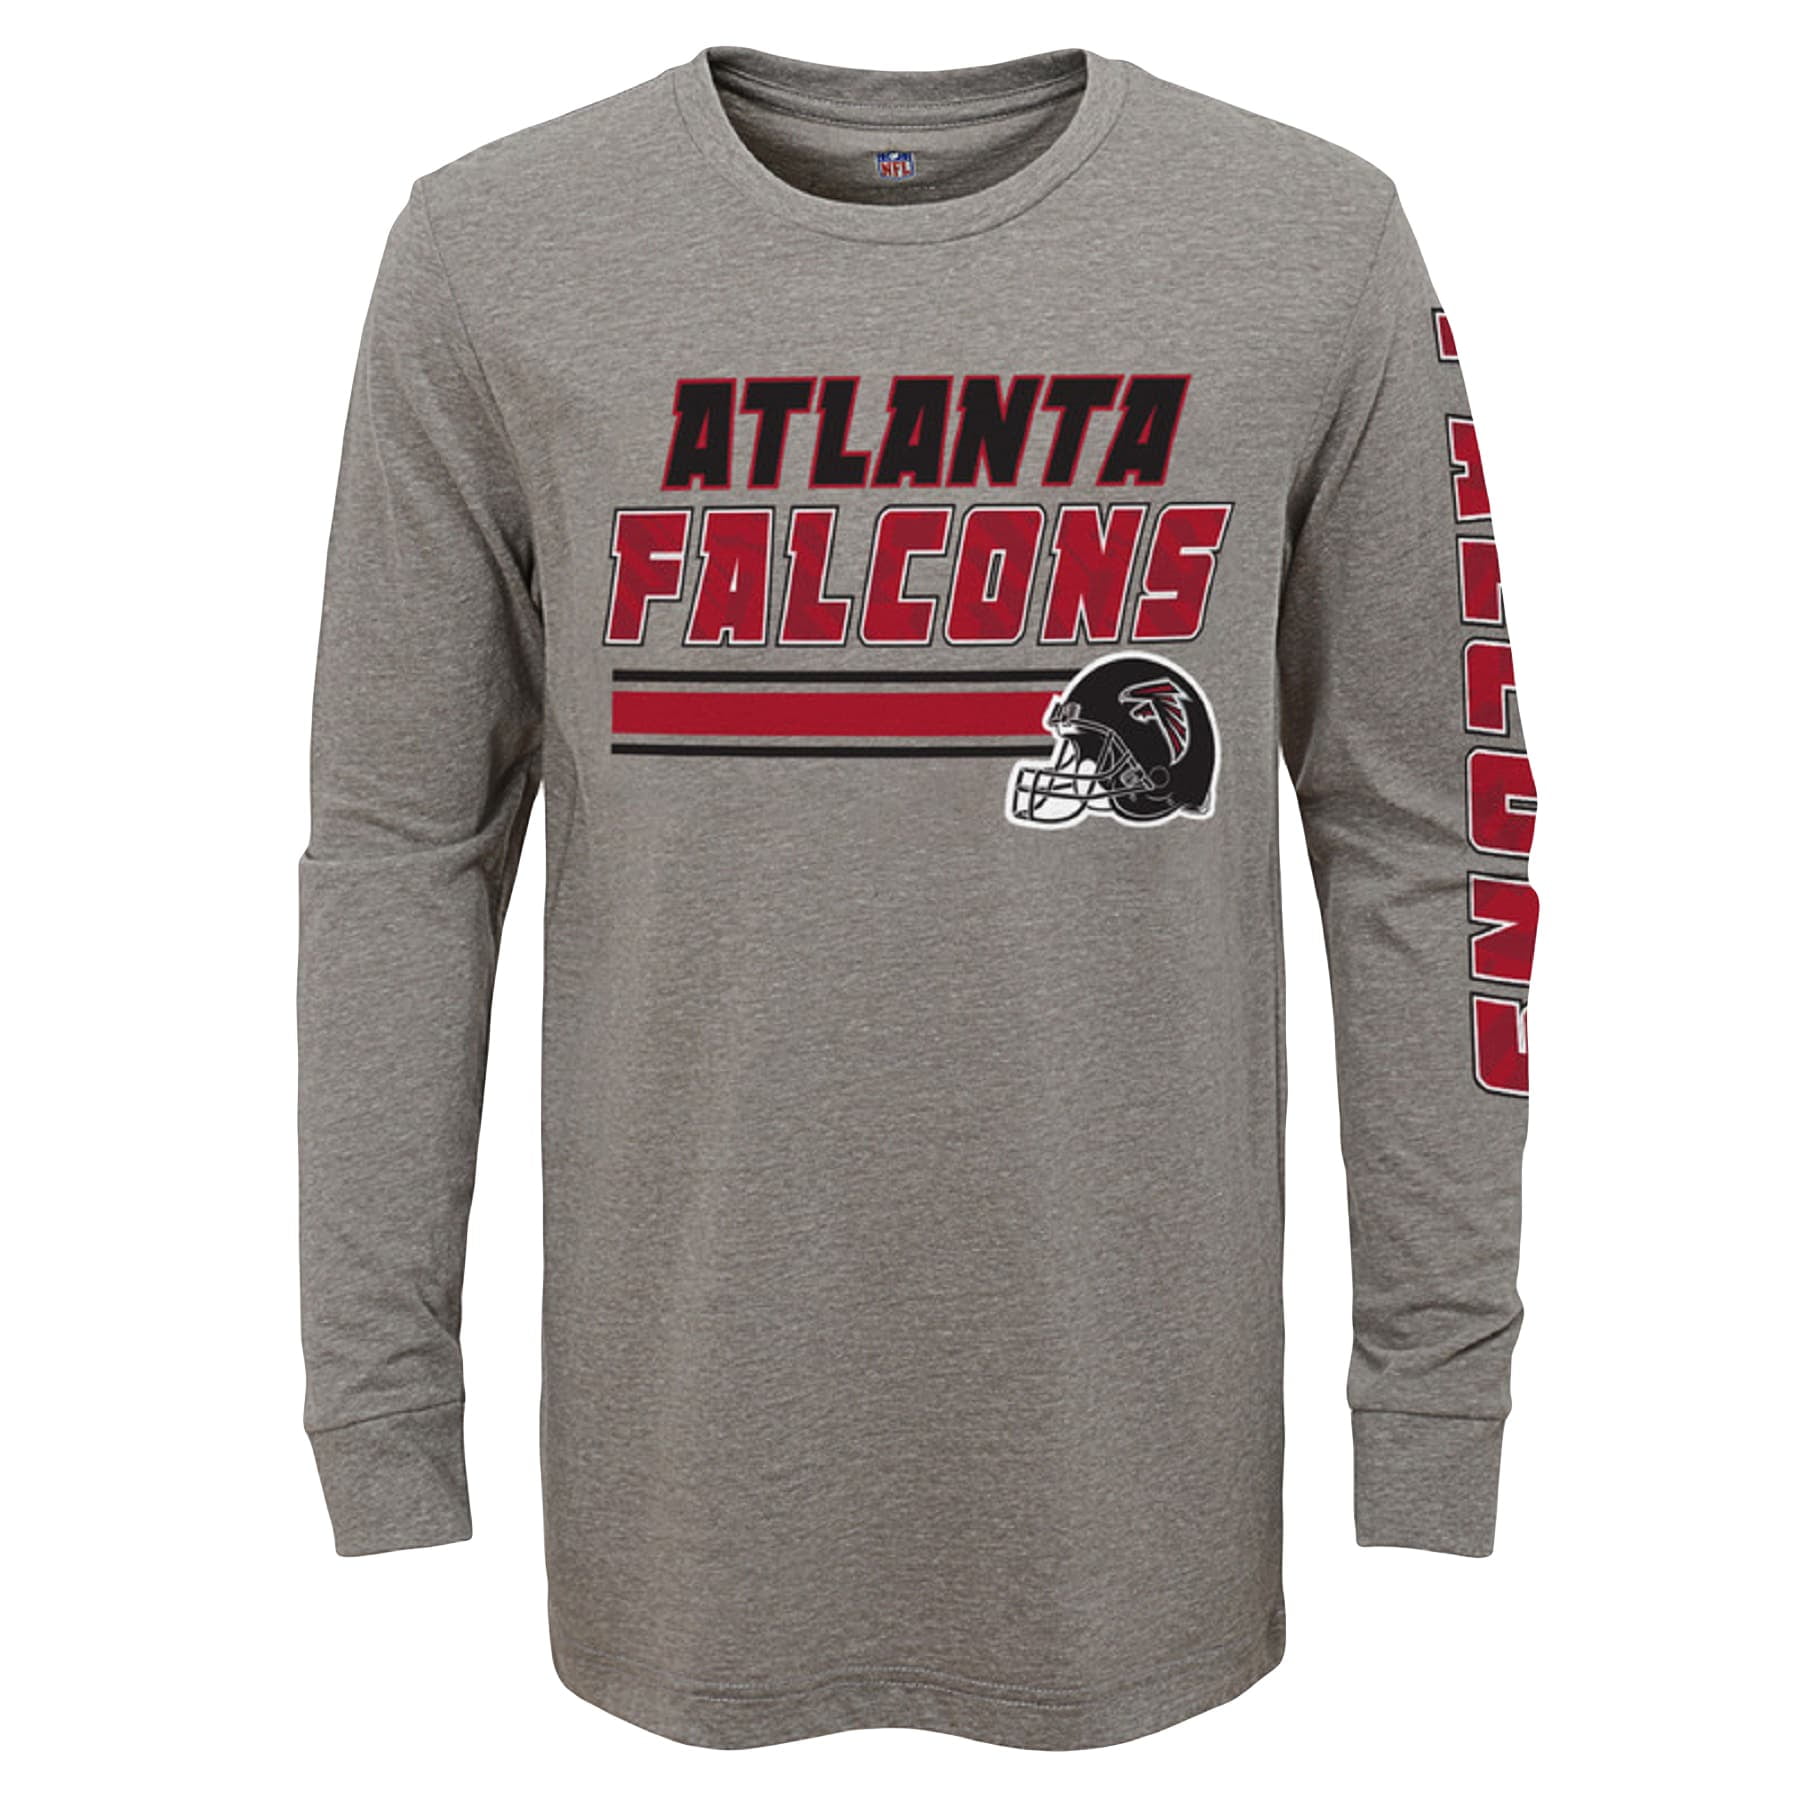 falcons long sleeve shirt